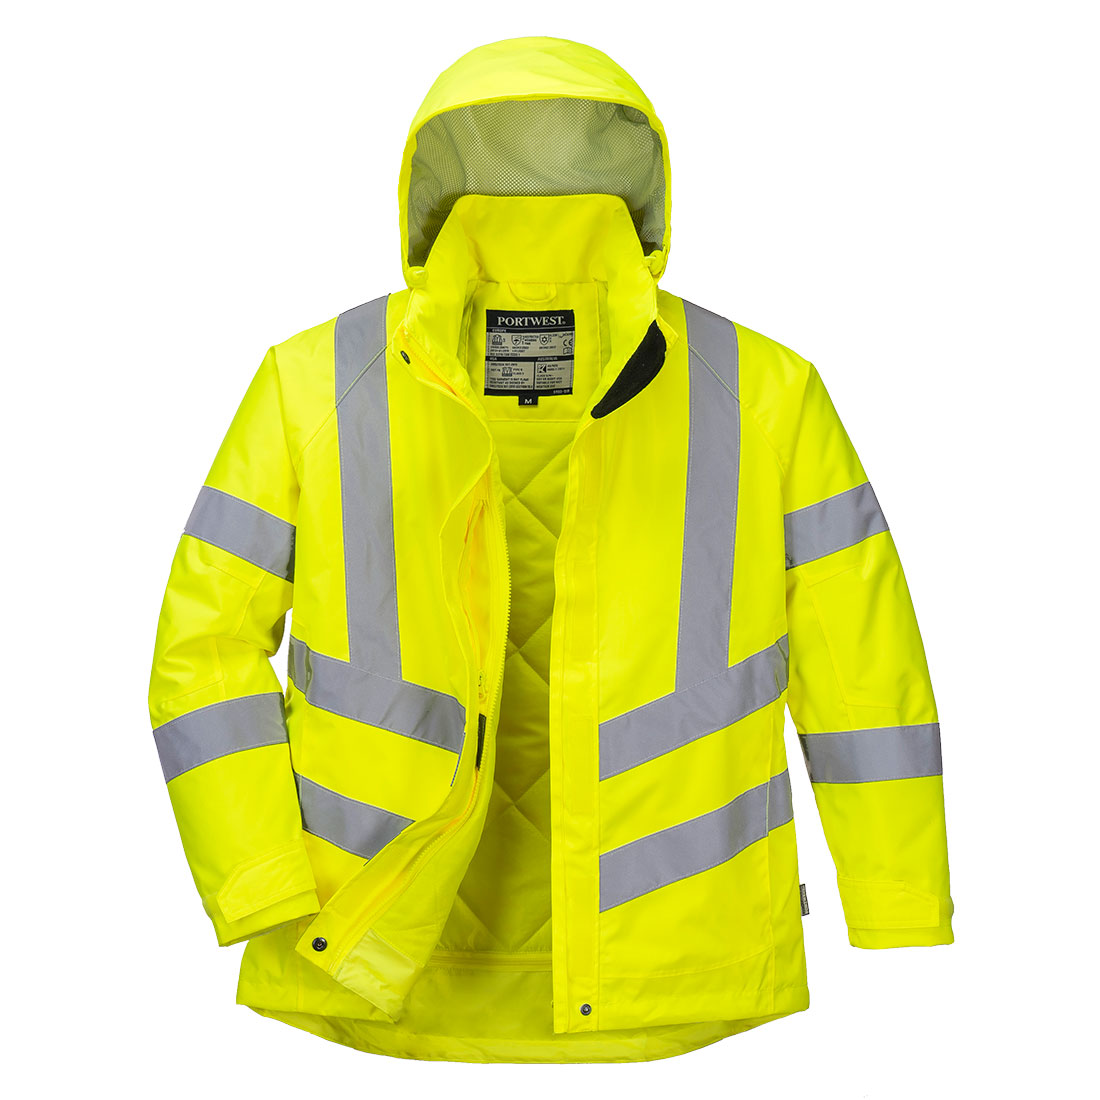 Ladies Hi-Vis Winter Jacket, Yellow     Size XXL R/Fit